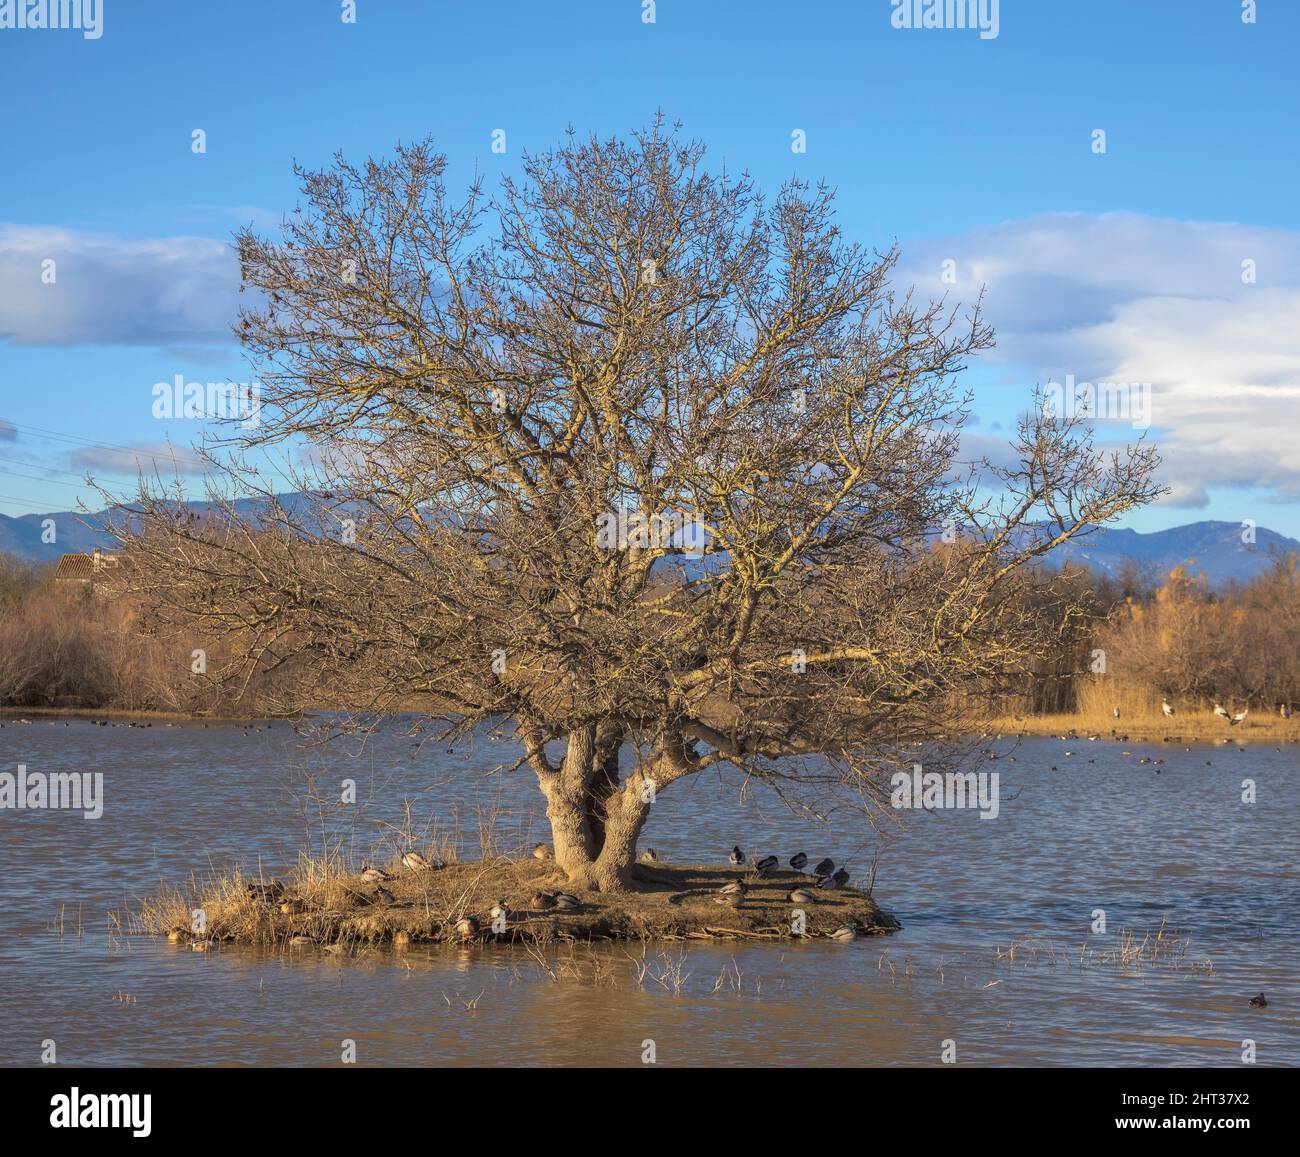 Wetland with different bird species at Aiguamolls d'Emporda, Catalonia Stock Photo